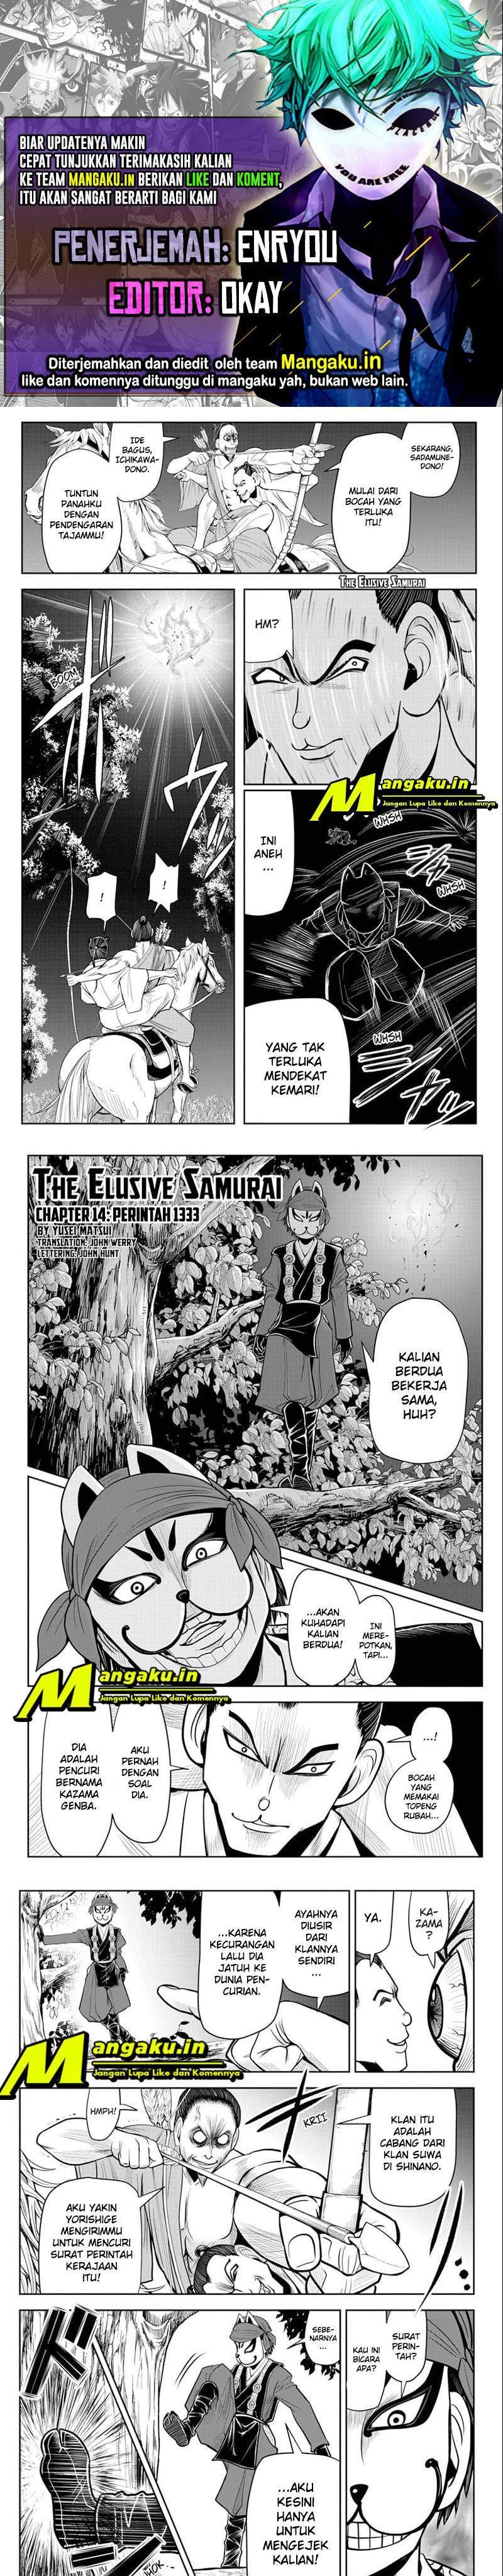 The Elusive Samurai Chapter 14 1